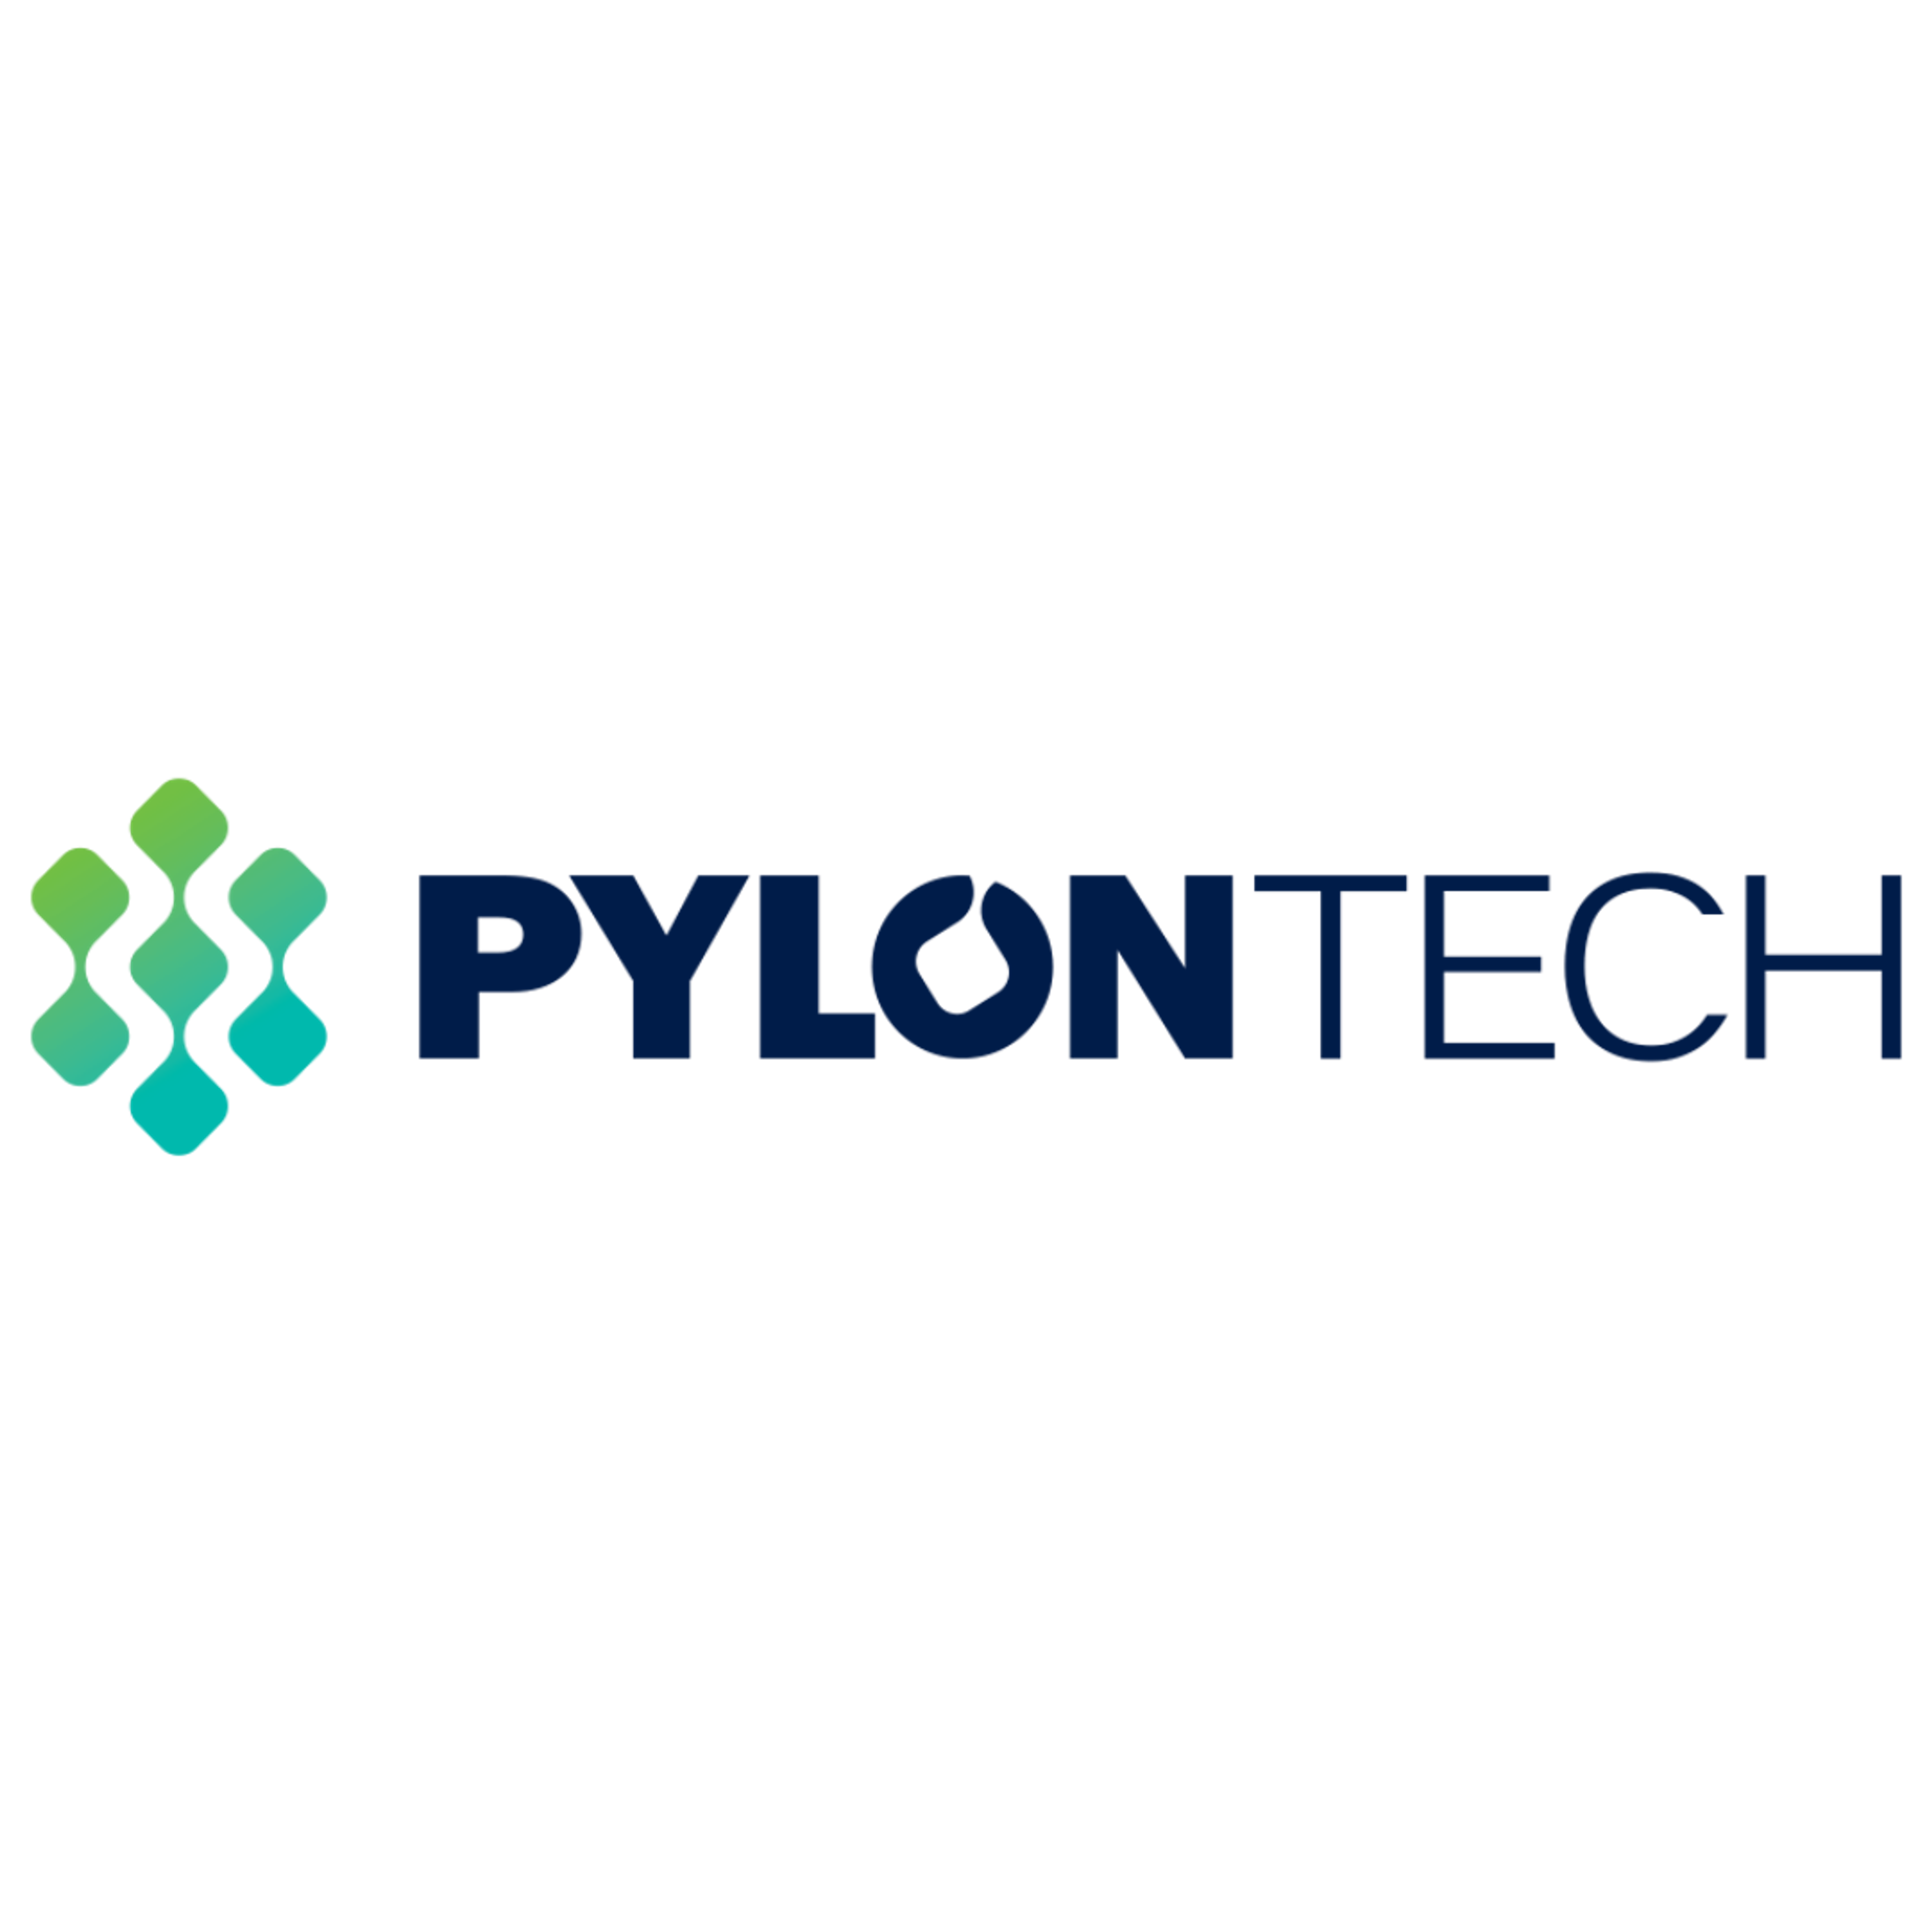 pylontech logo